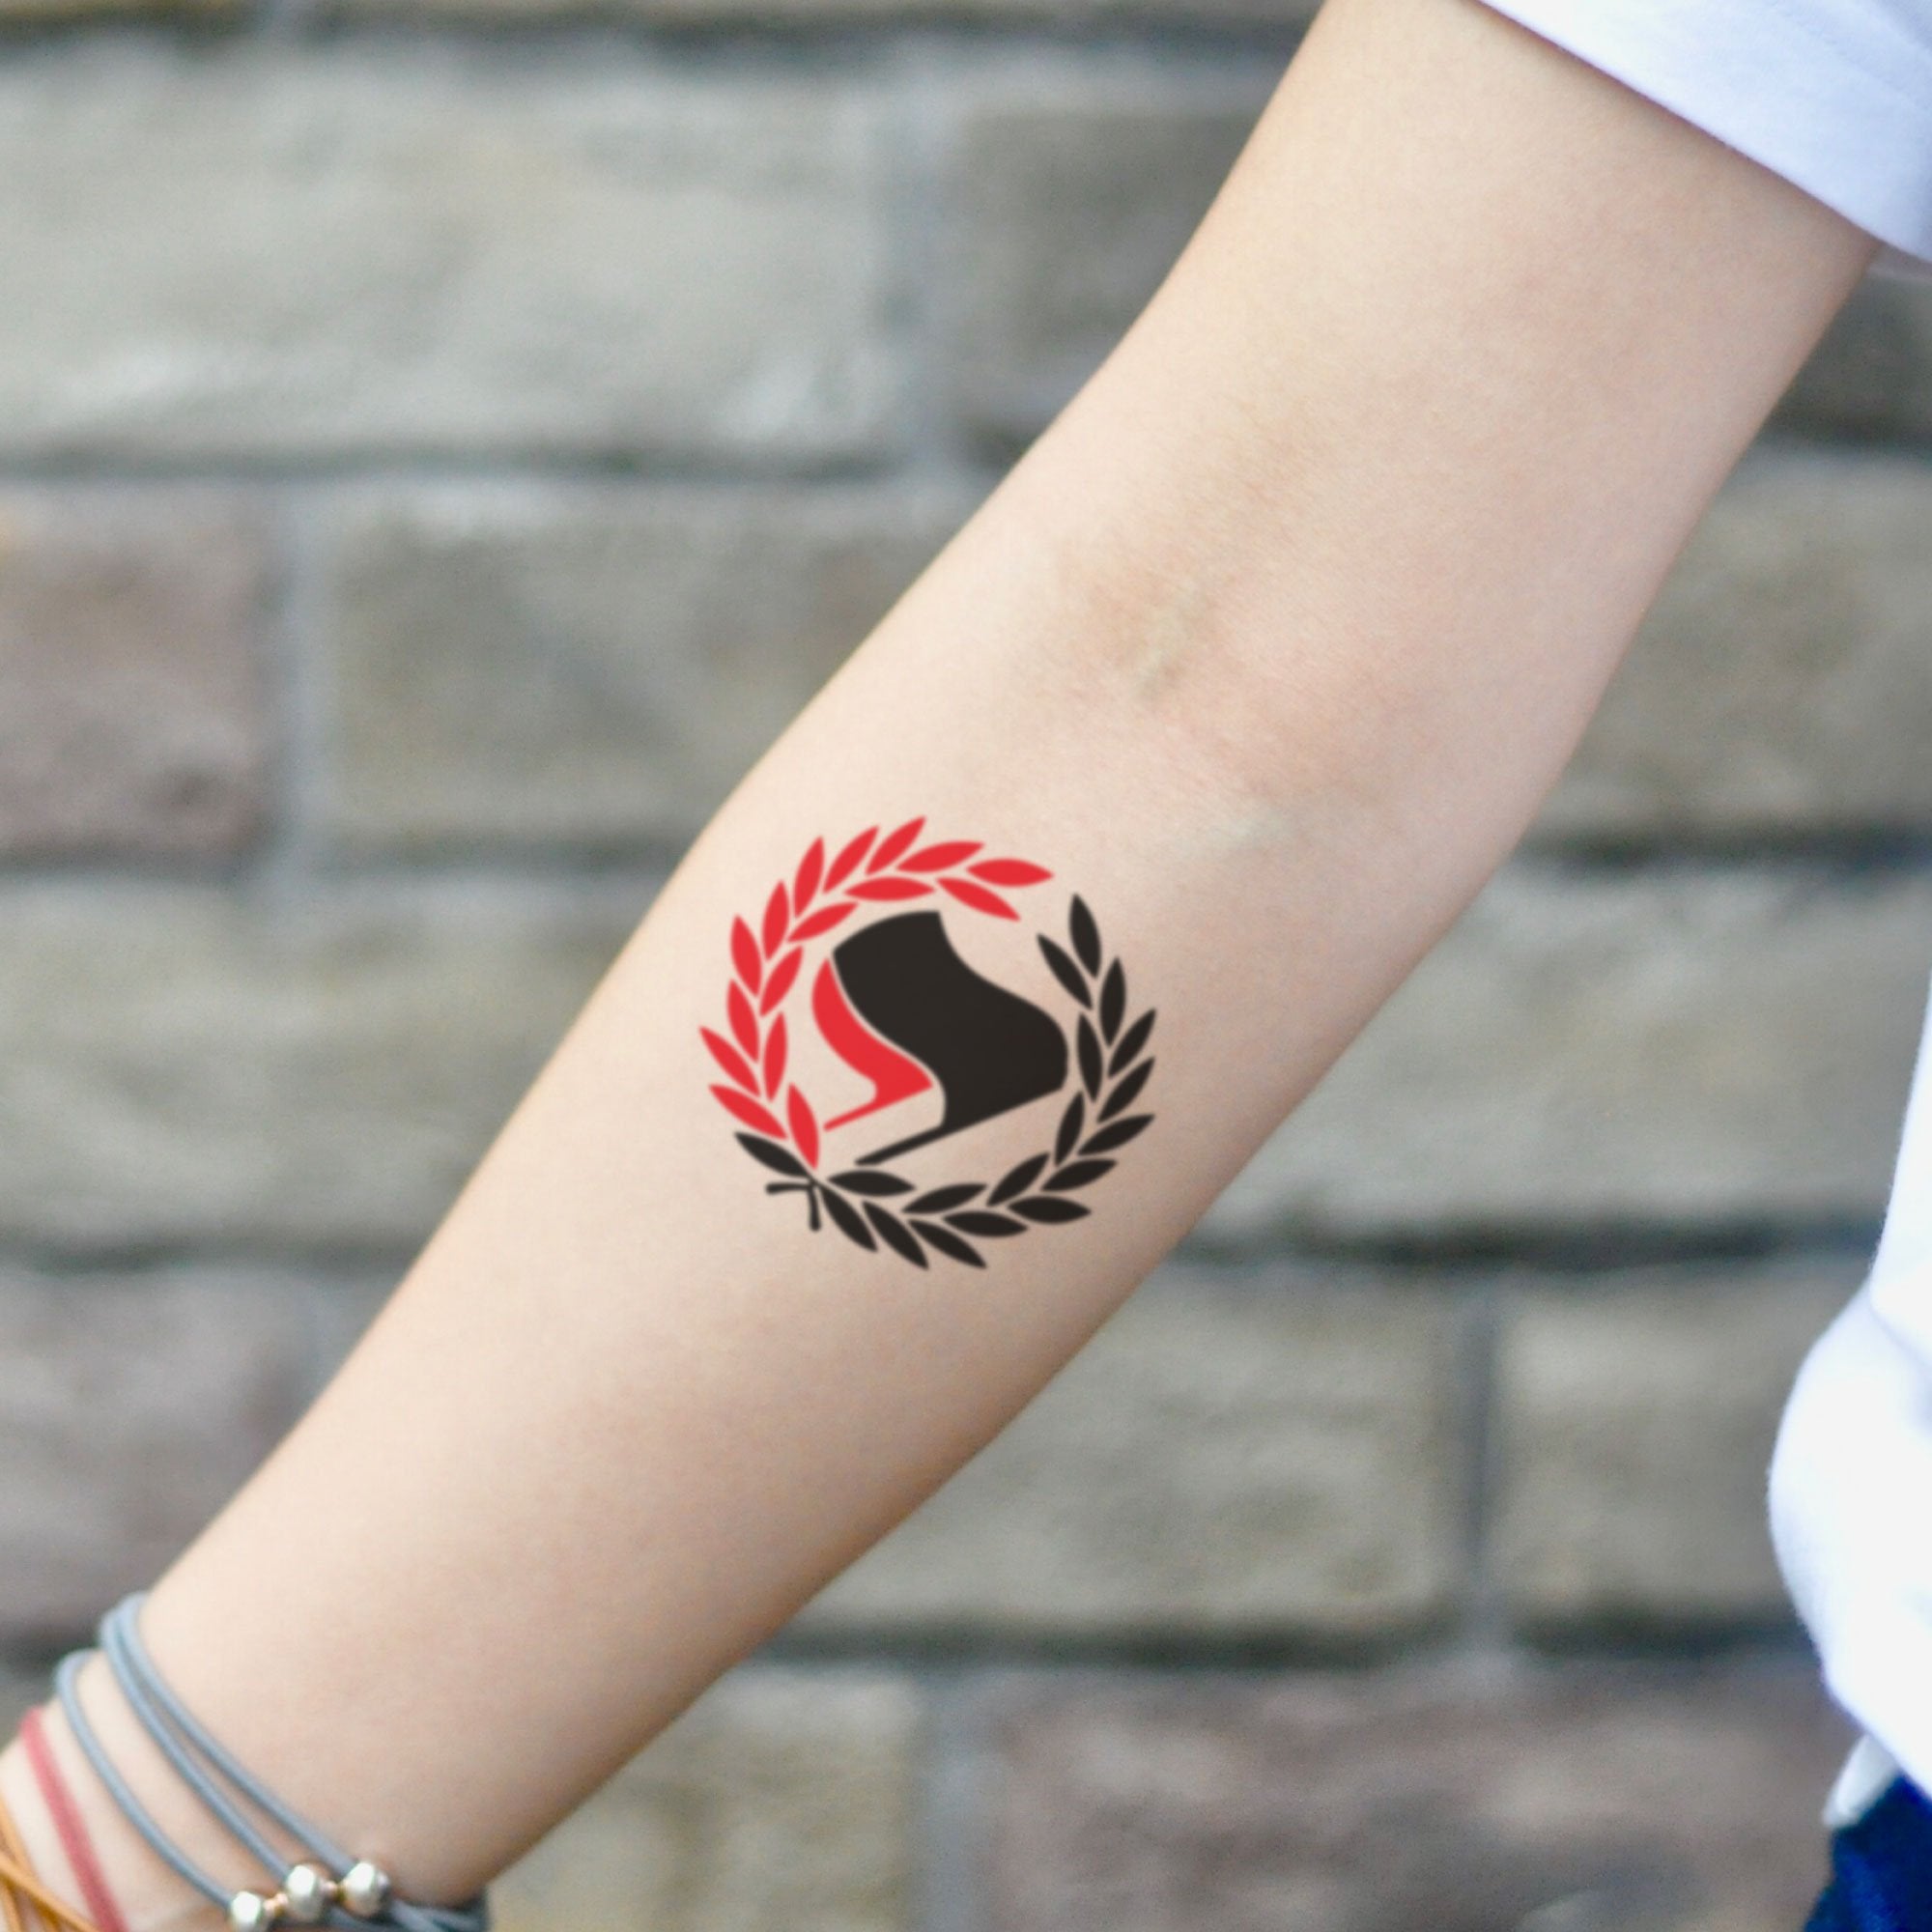 Inspiring Atheist Symbol Tattoos